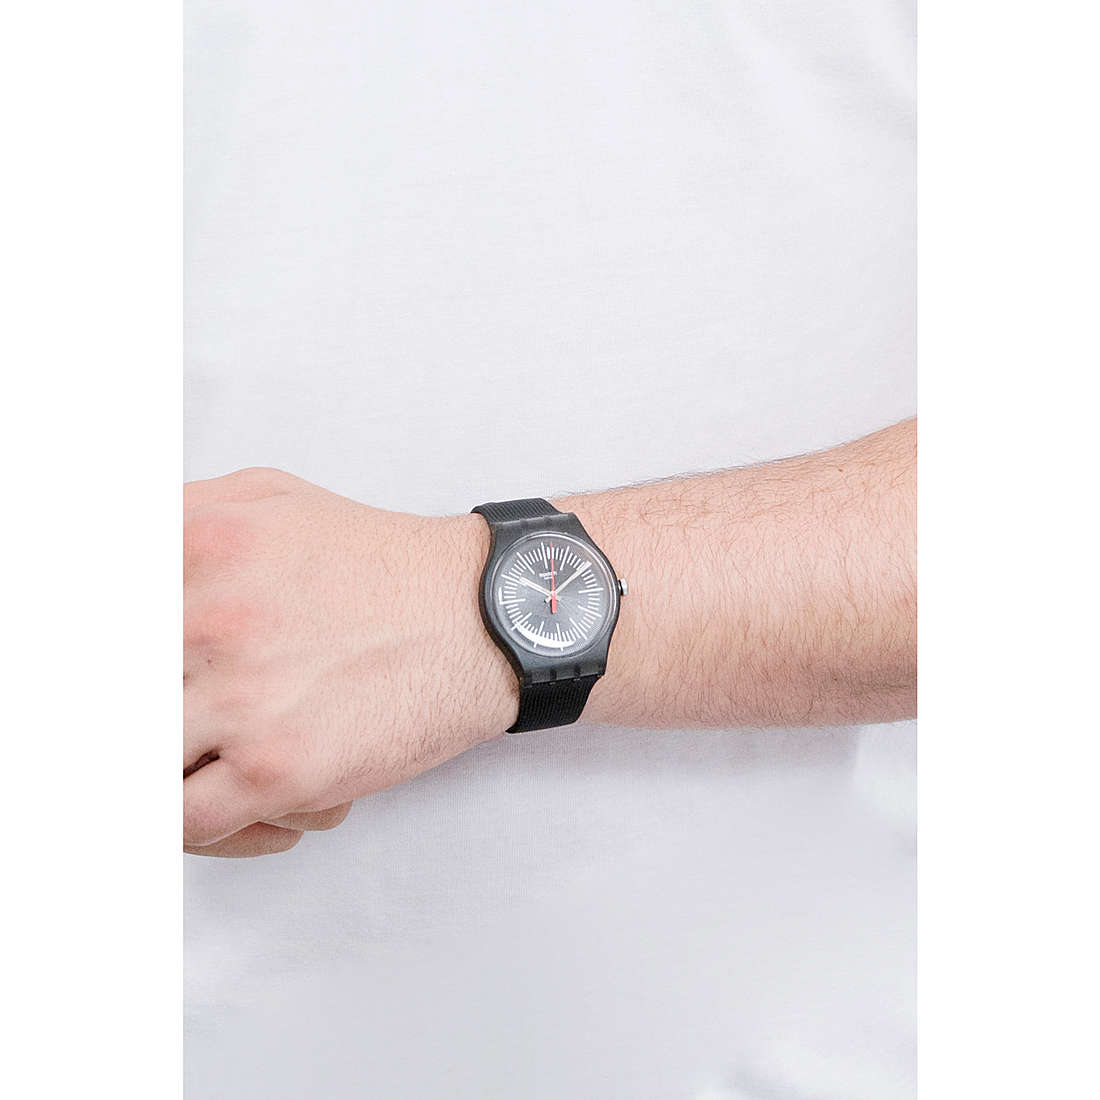 Swatch solo tempo Essentials uomo SUOB178 indosso